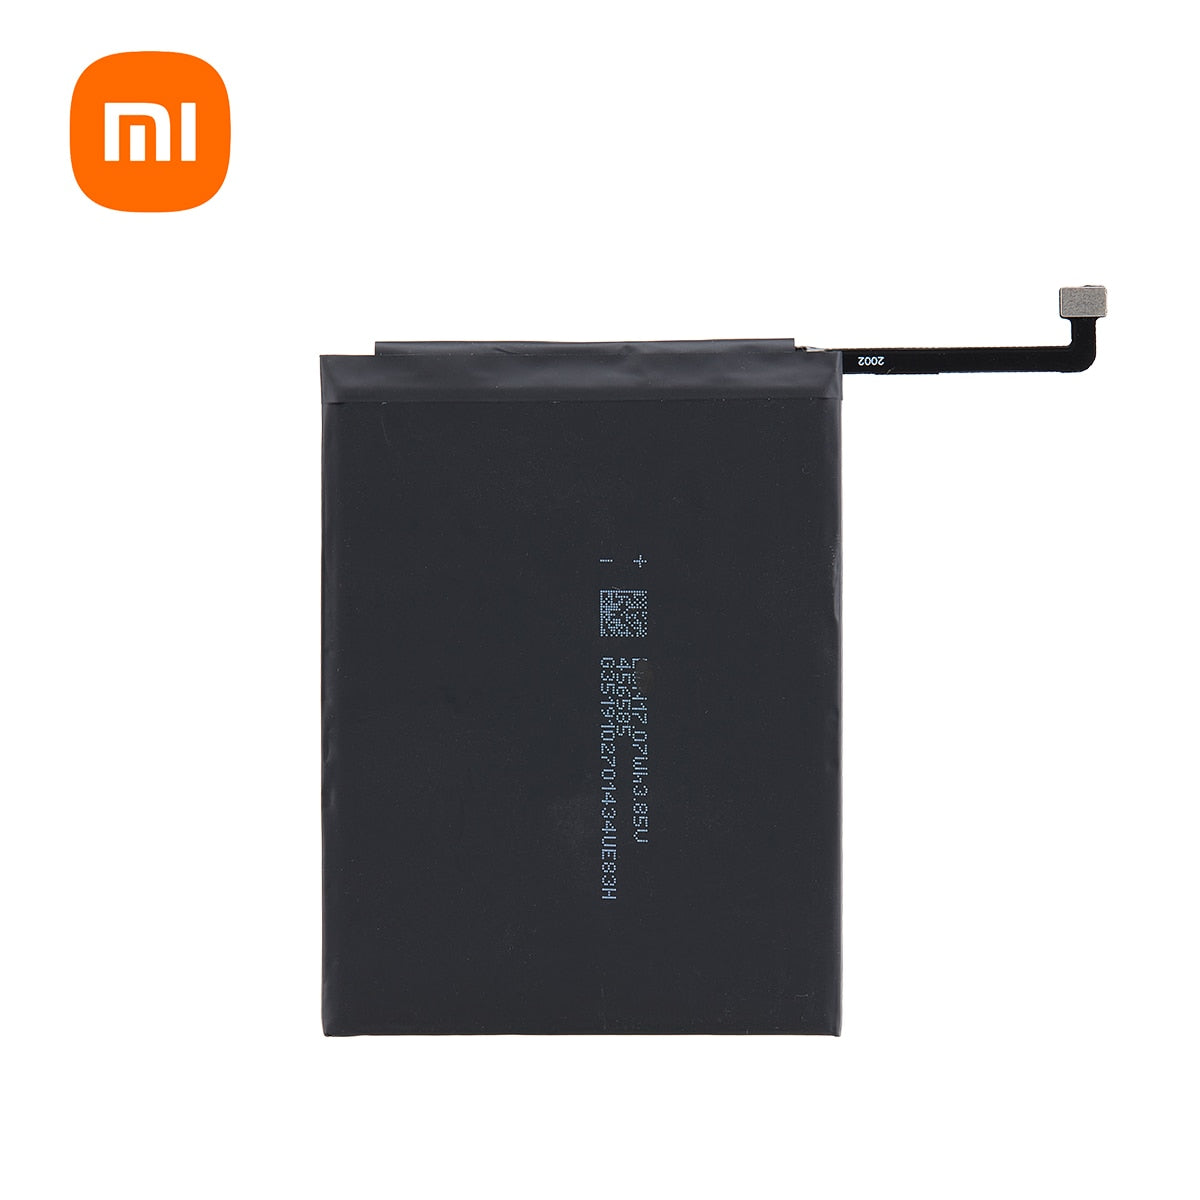 Xiao mi 100% Orginal BM4J 4500mAh Battery For Xiaomi Redmi Note 8 Pro Note8 Pro High Quality Phone Replacement Batteries +Tools